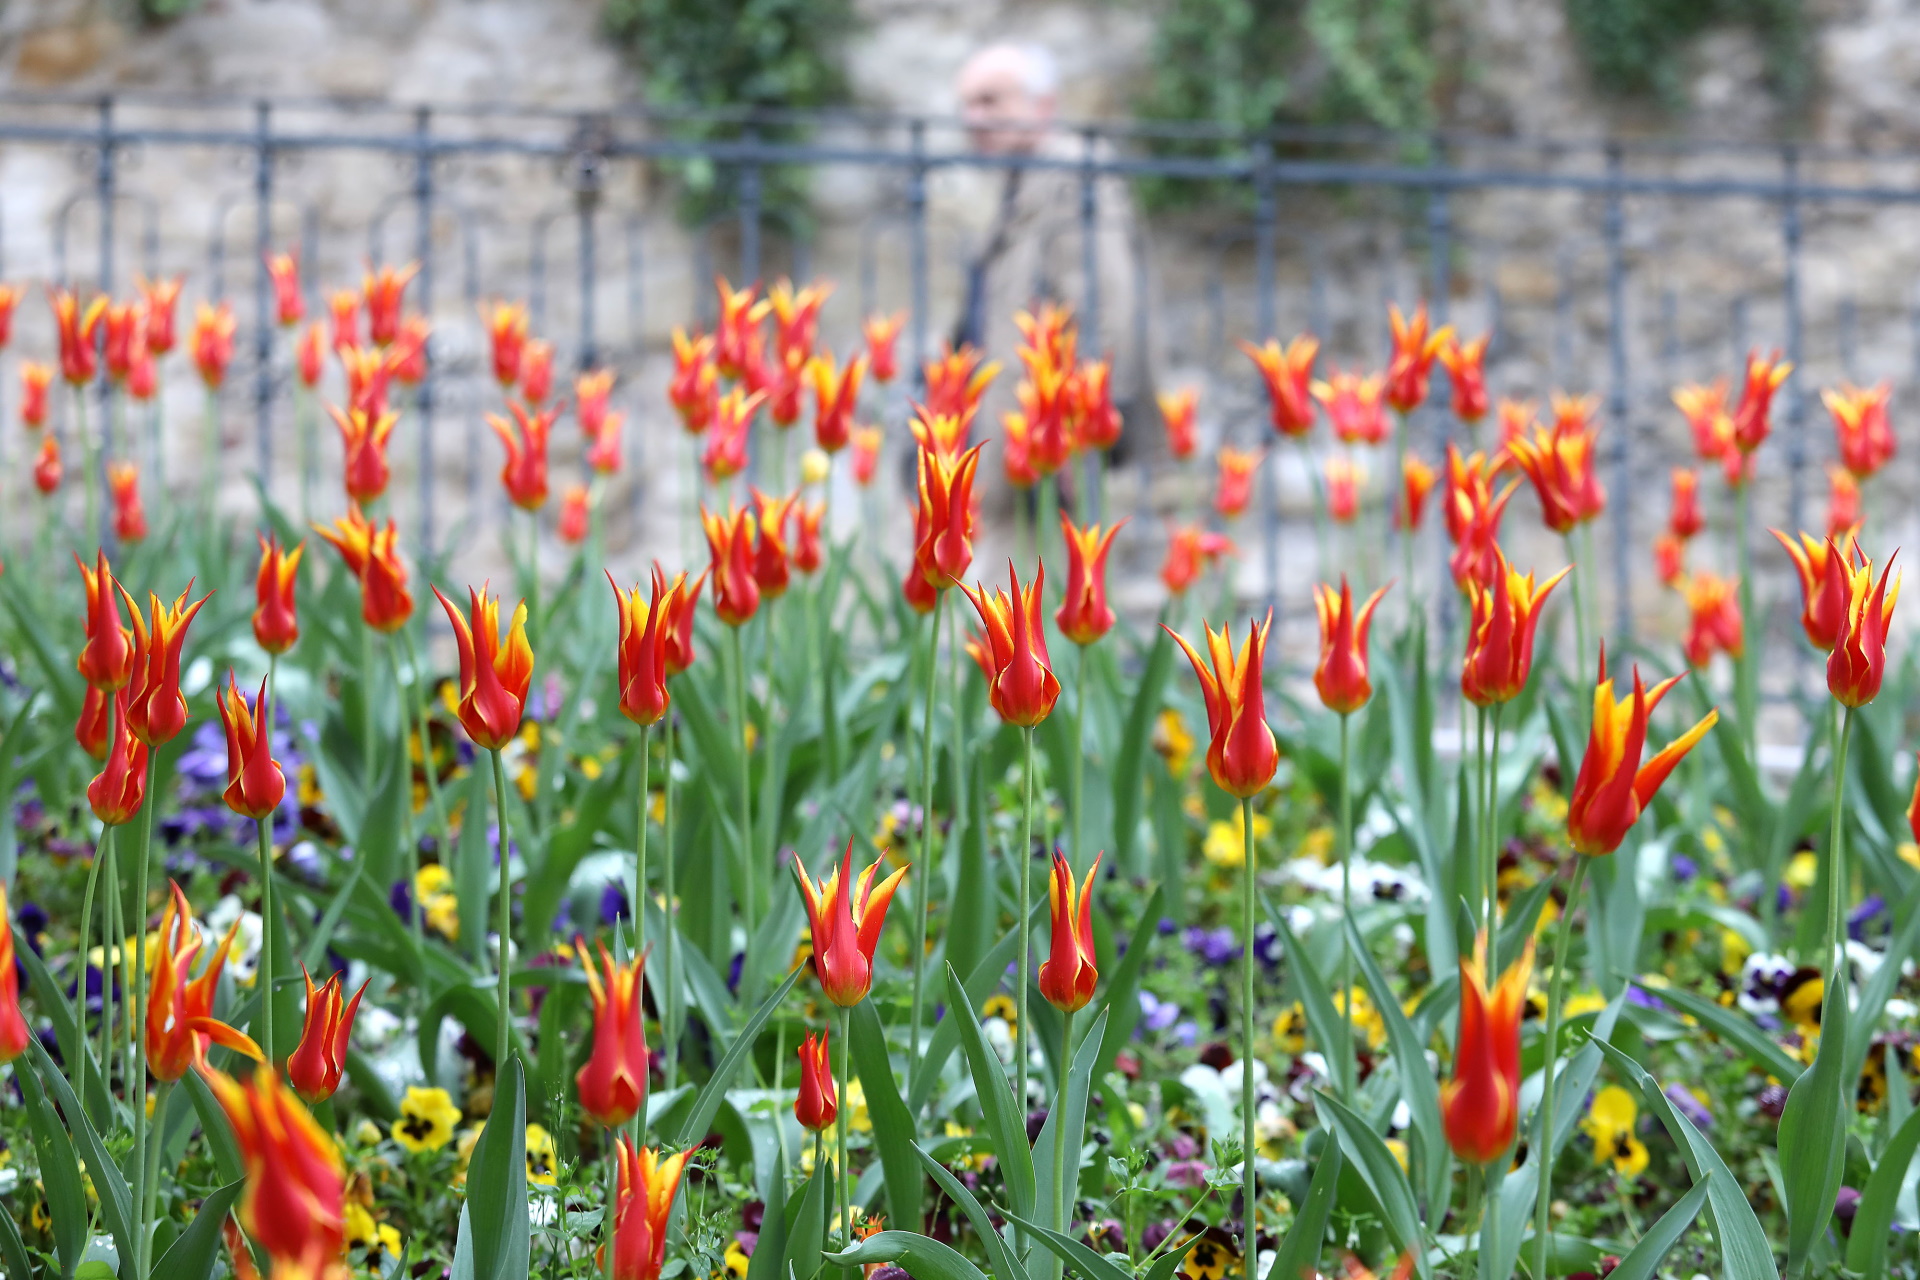 28.04.2021., Zagreb - Dvobojnim tulipanima ukrasen park oko spomenika svetom Jurju kod Kamenitih vrata. Photo: Patrik Macek/PIXSELL